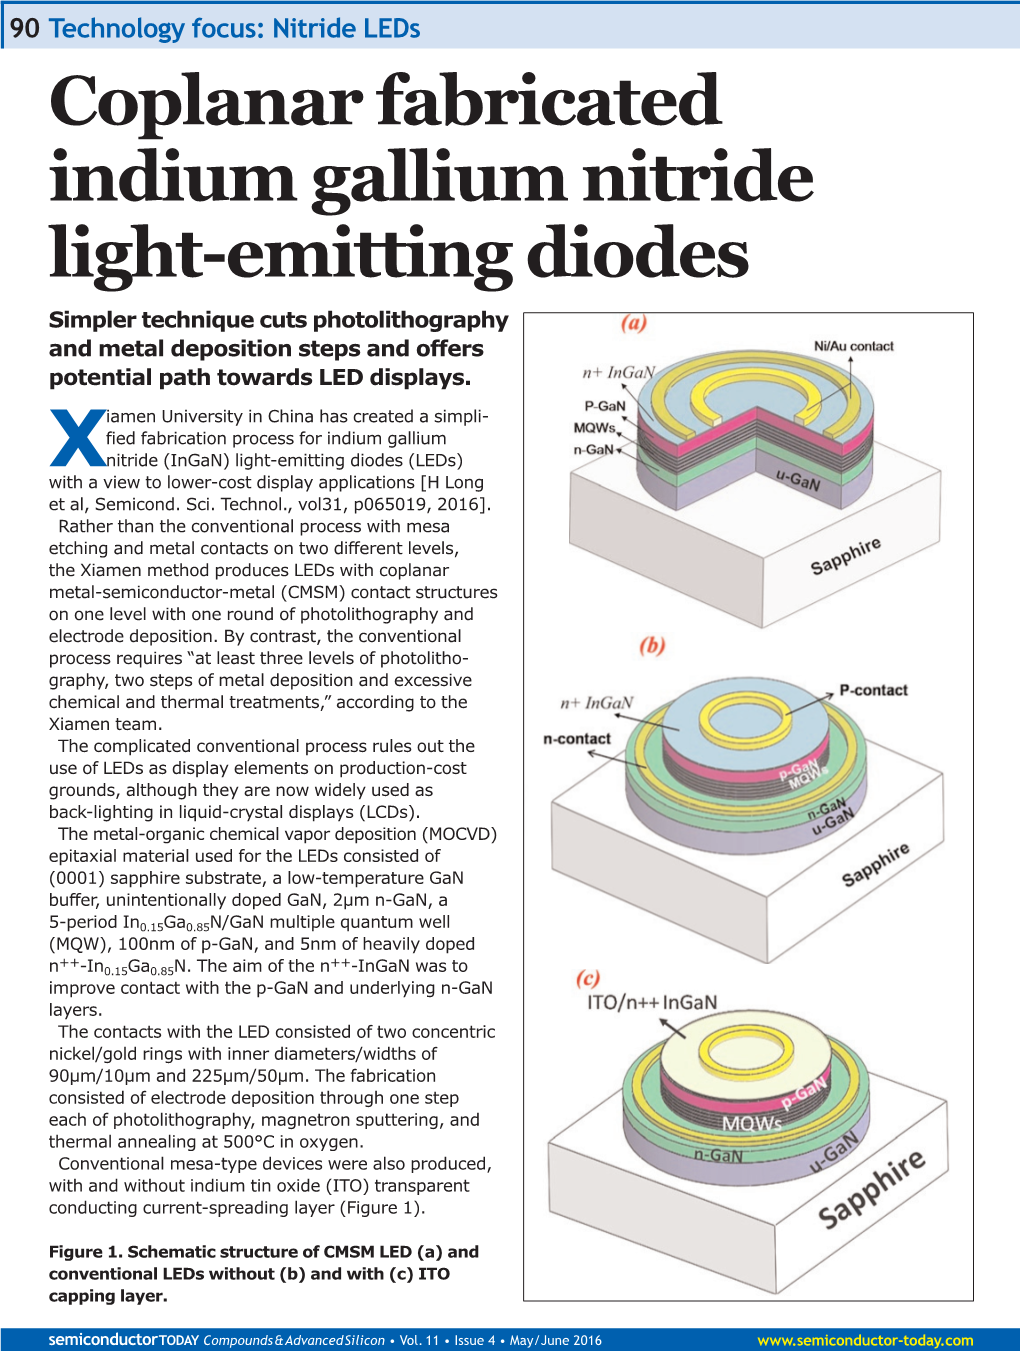 Coplanar Fabricated Indium Gallium Nitride Light-Emitting Diodes